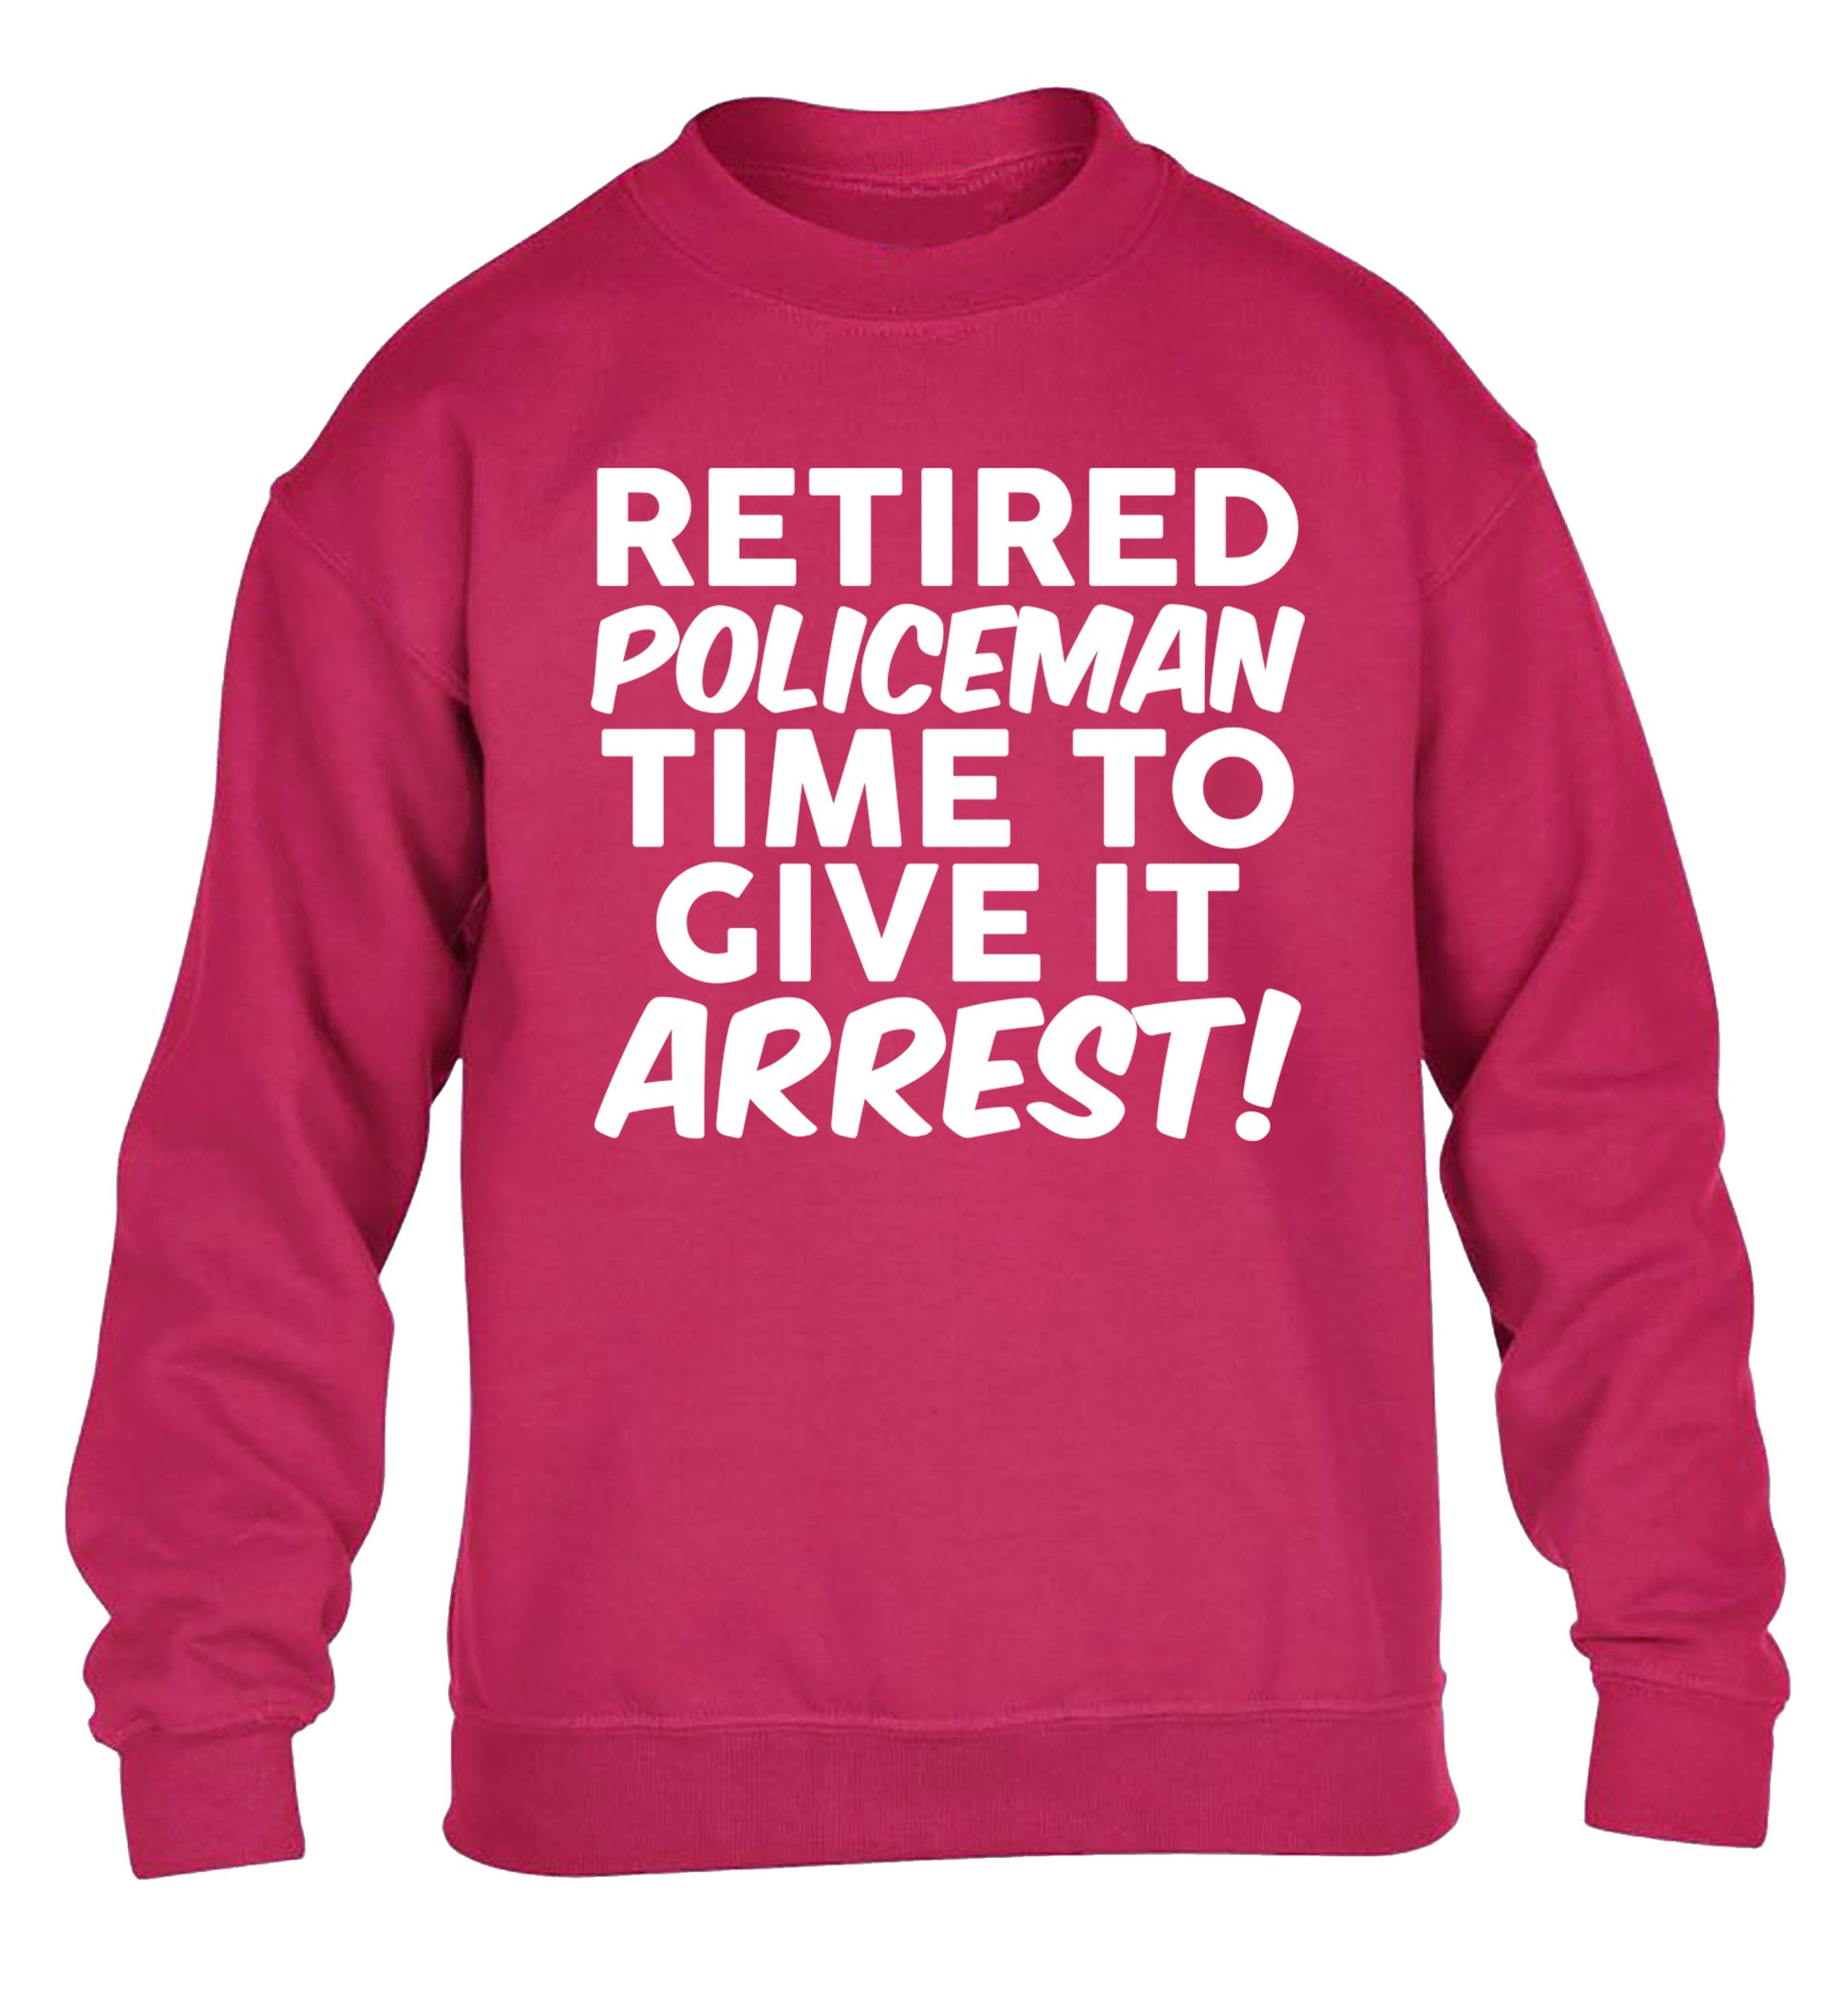 Retired policeman give it arresst! children's pink sweater 12-13 Years